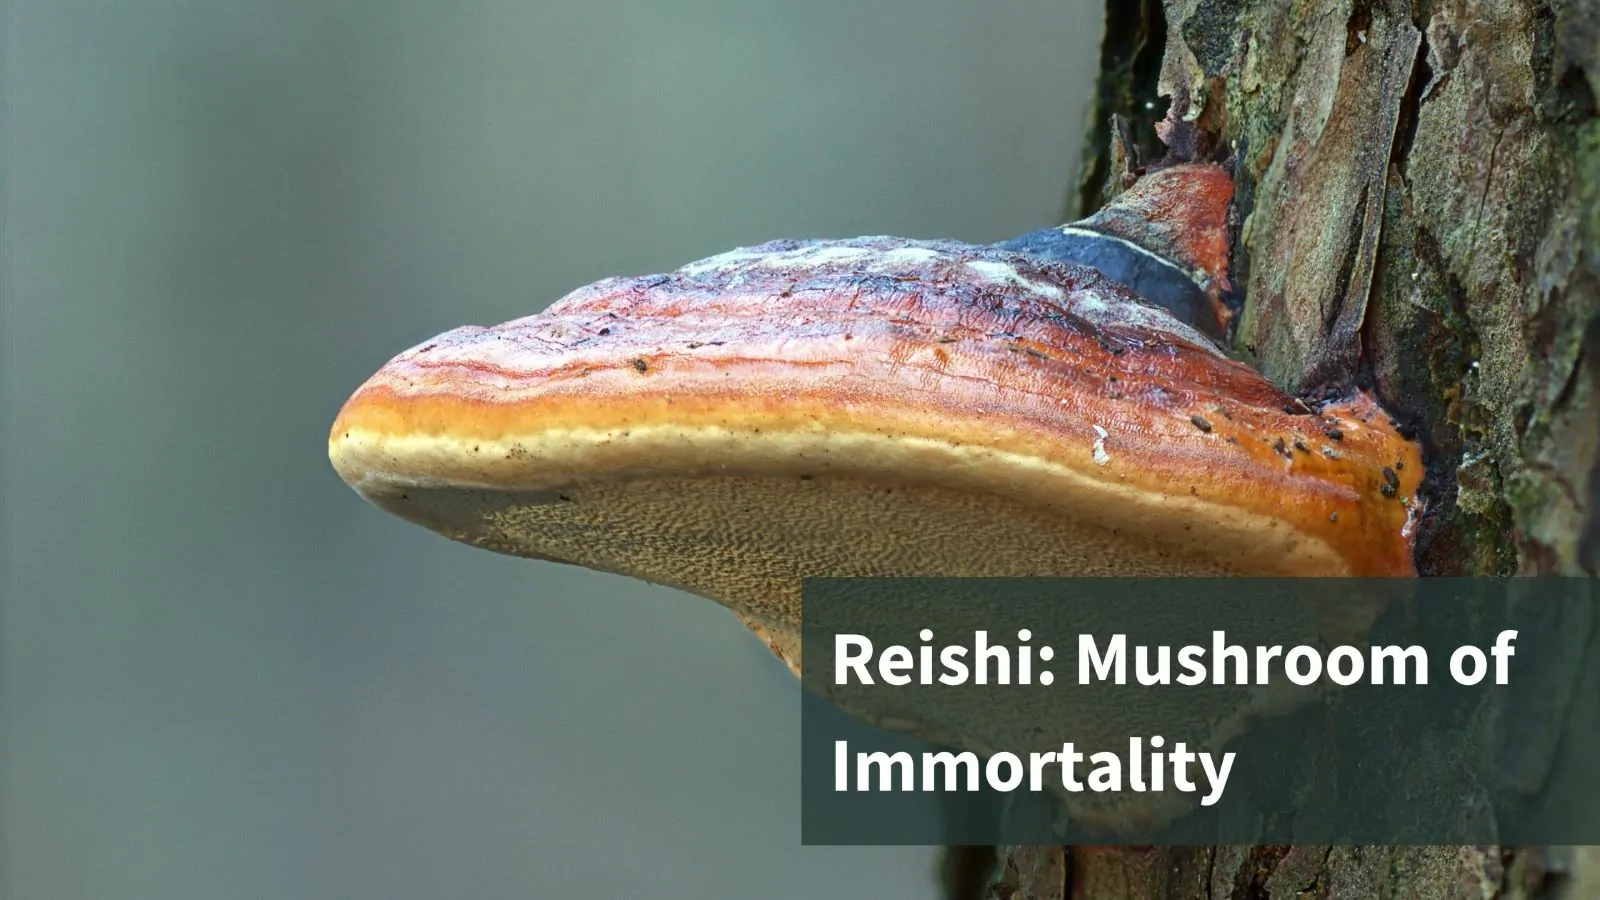 A Reishi Mushroom on a tree. The text reads "Reishi: Mushroom of Immortality"